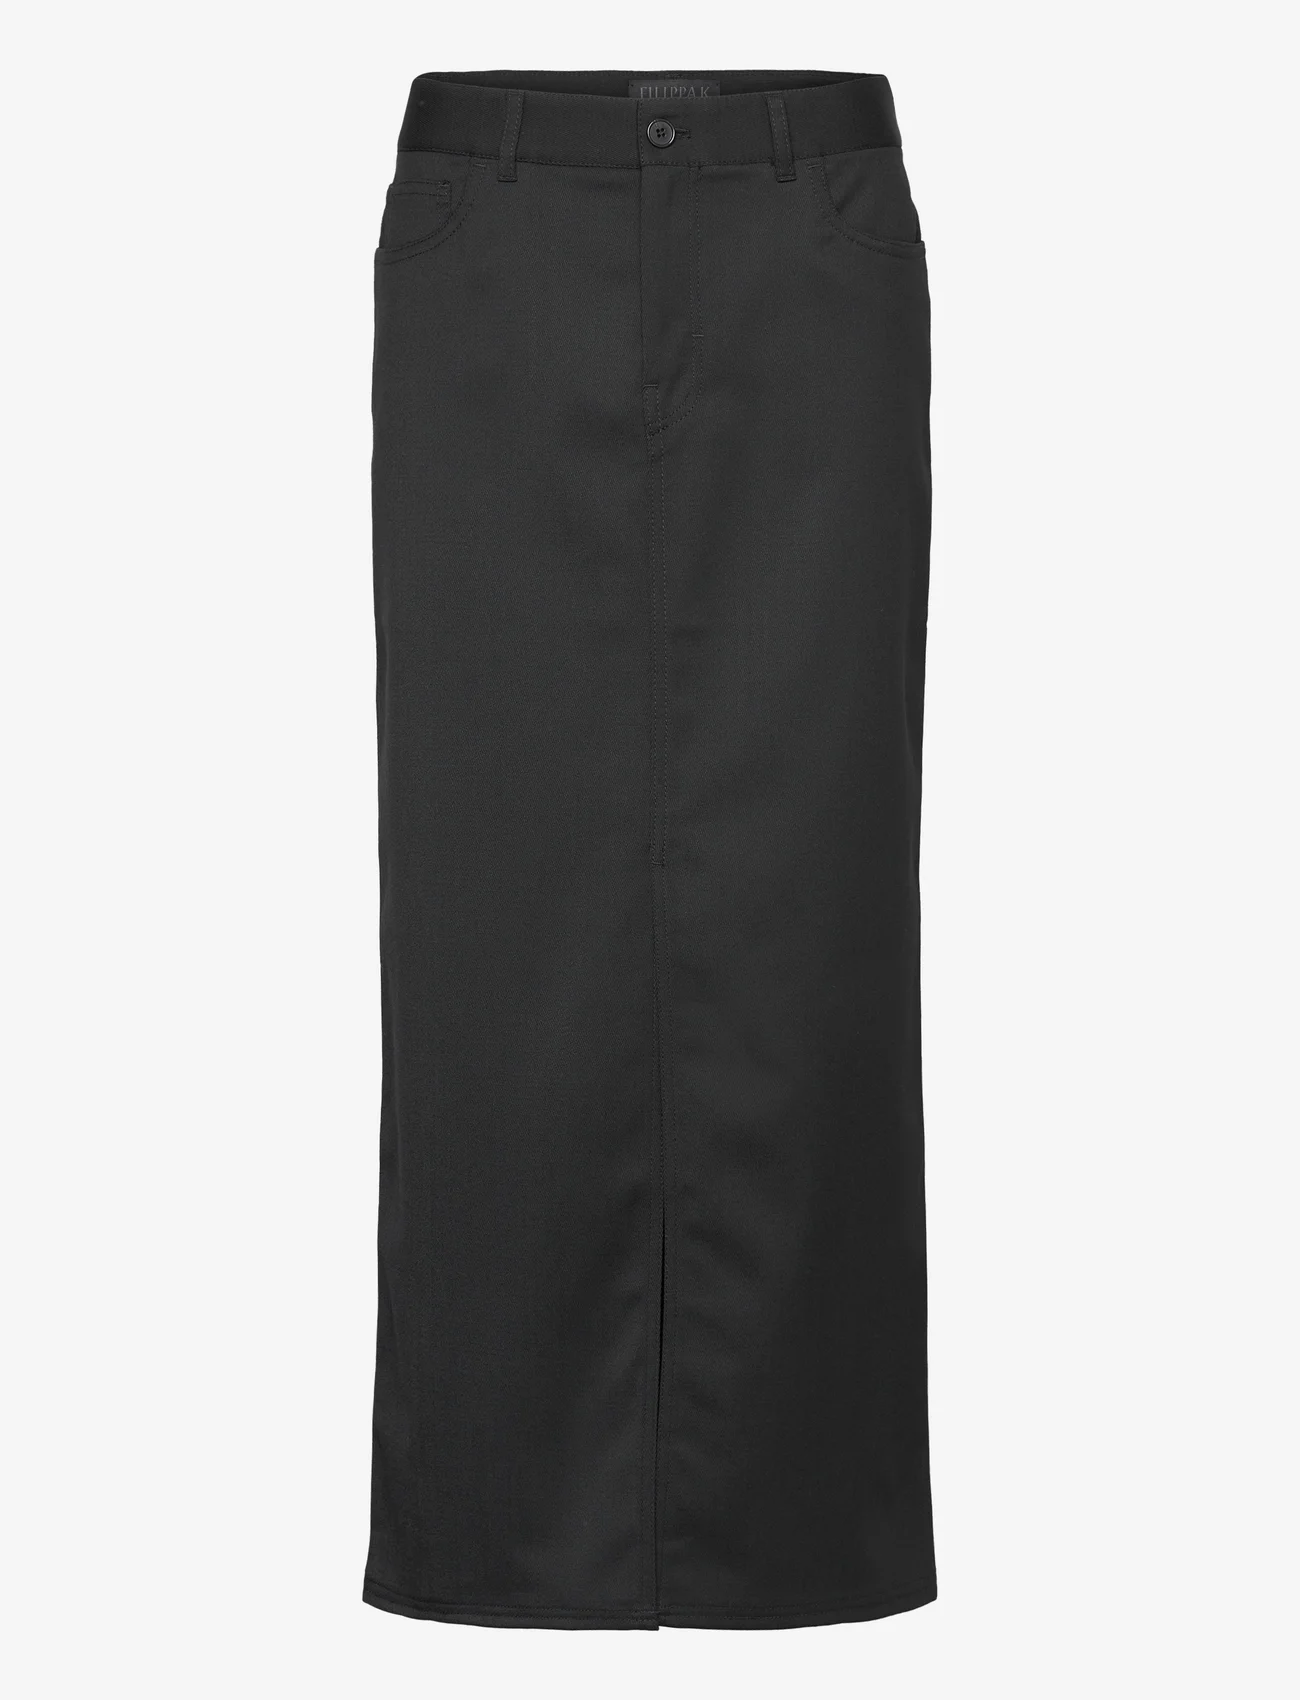 Filippa K - 93 Five Pocket Skirt - maxi skirts - black - 0